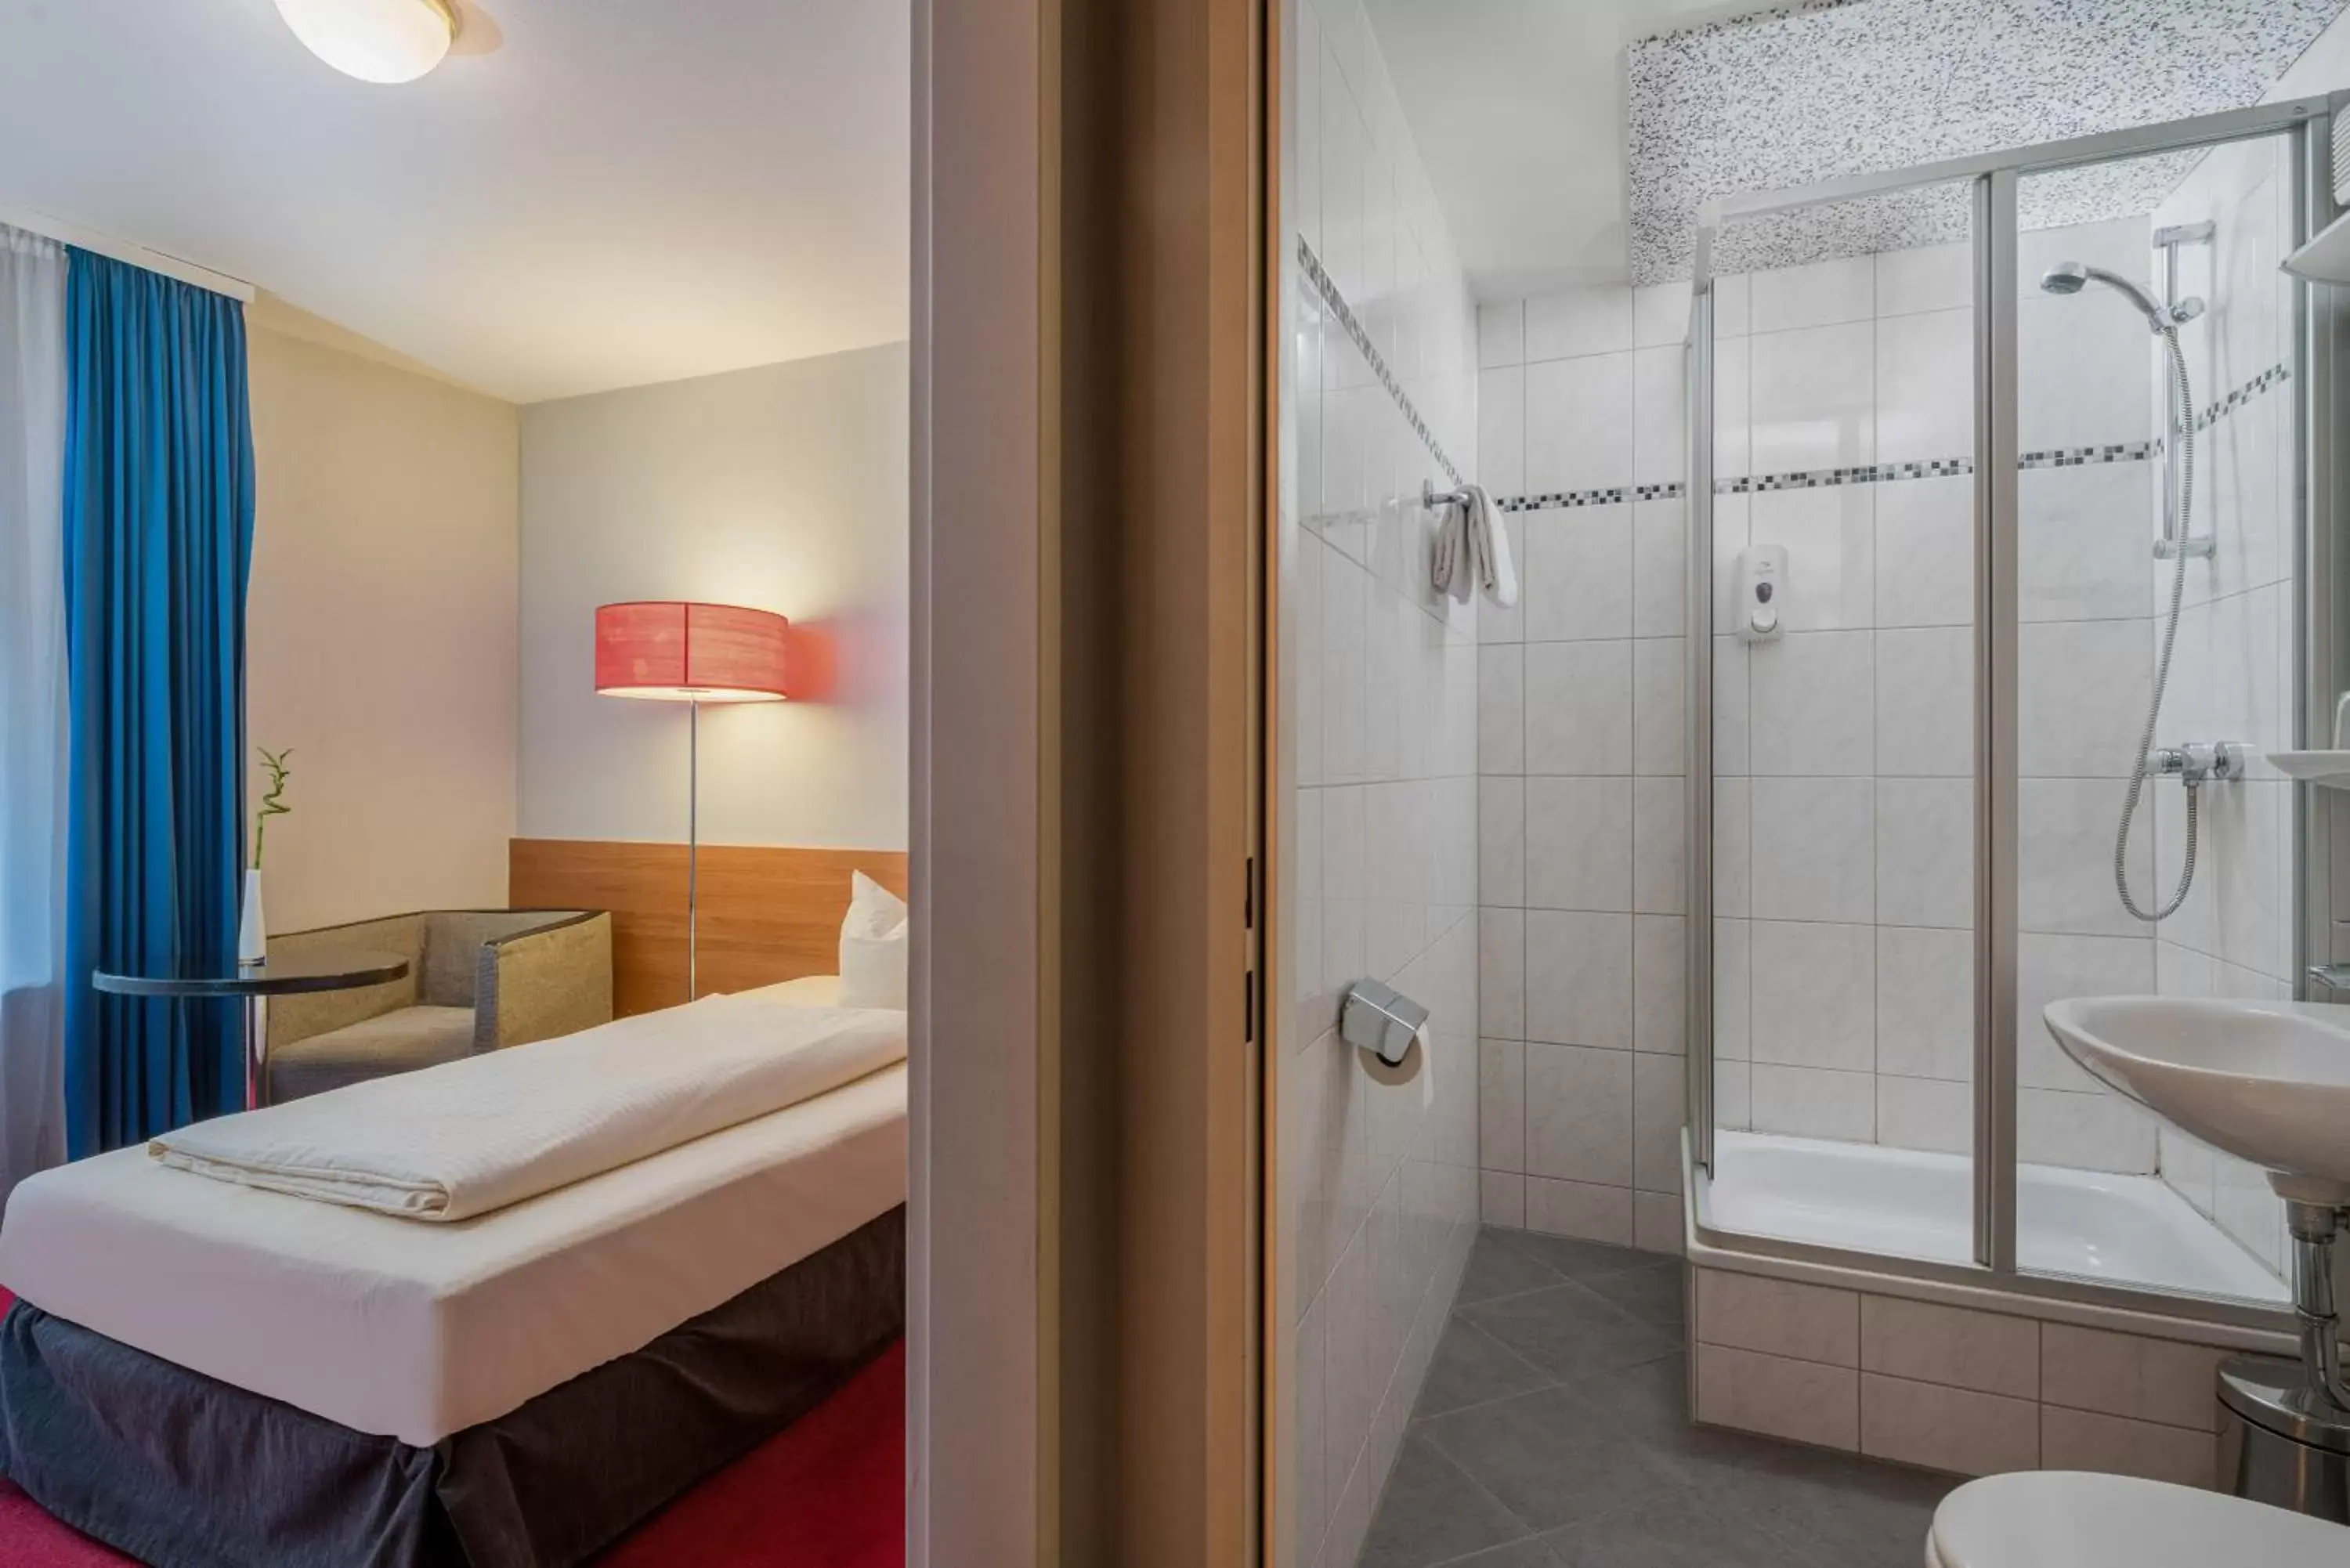 Photo of the whole room, Bathroom in Hotel Fidelio